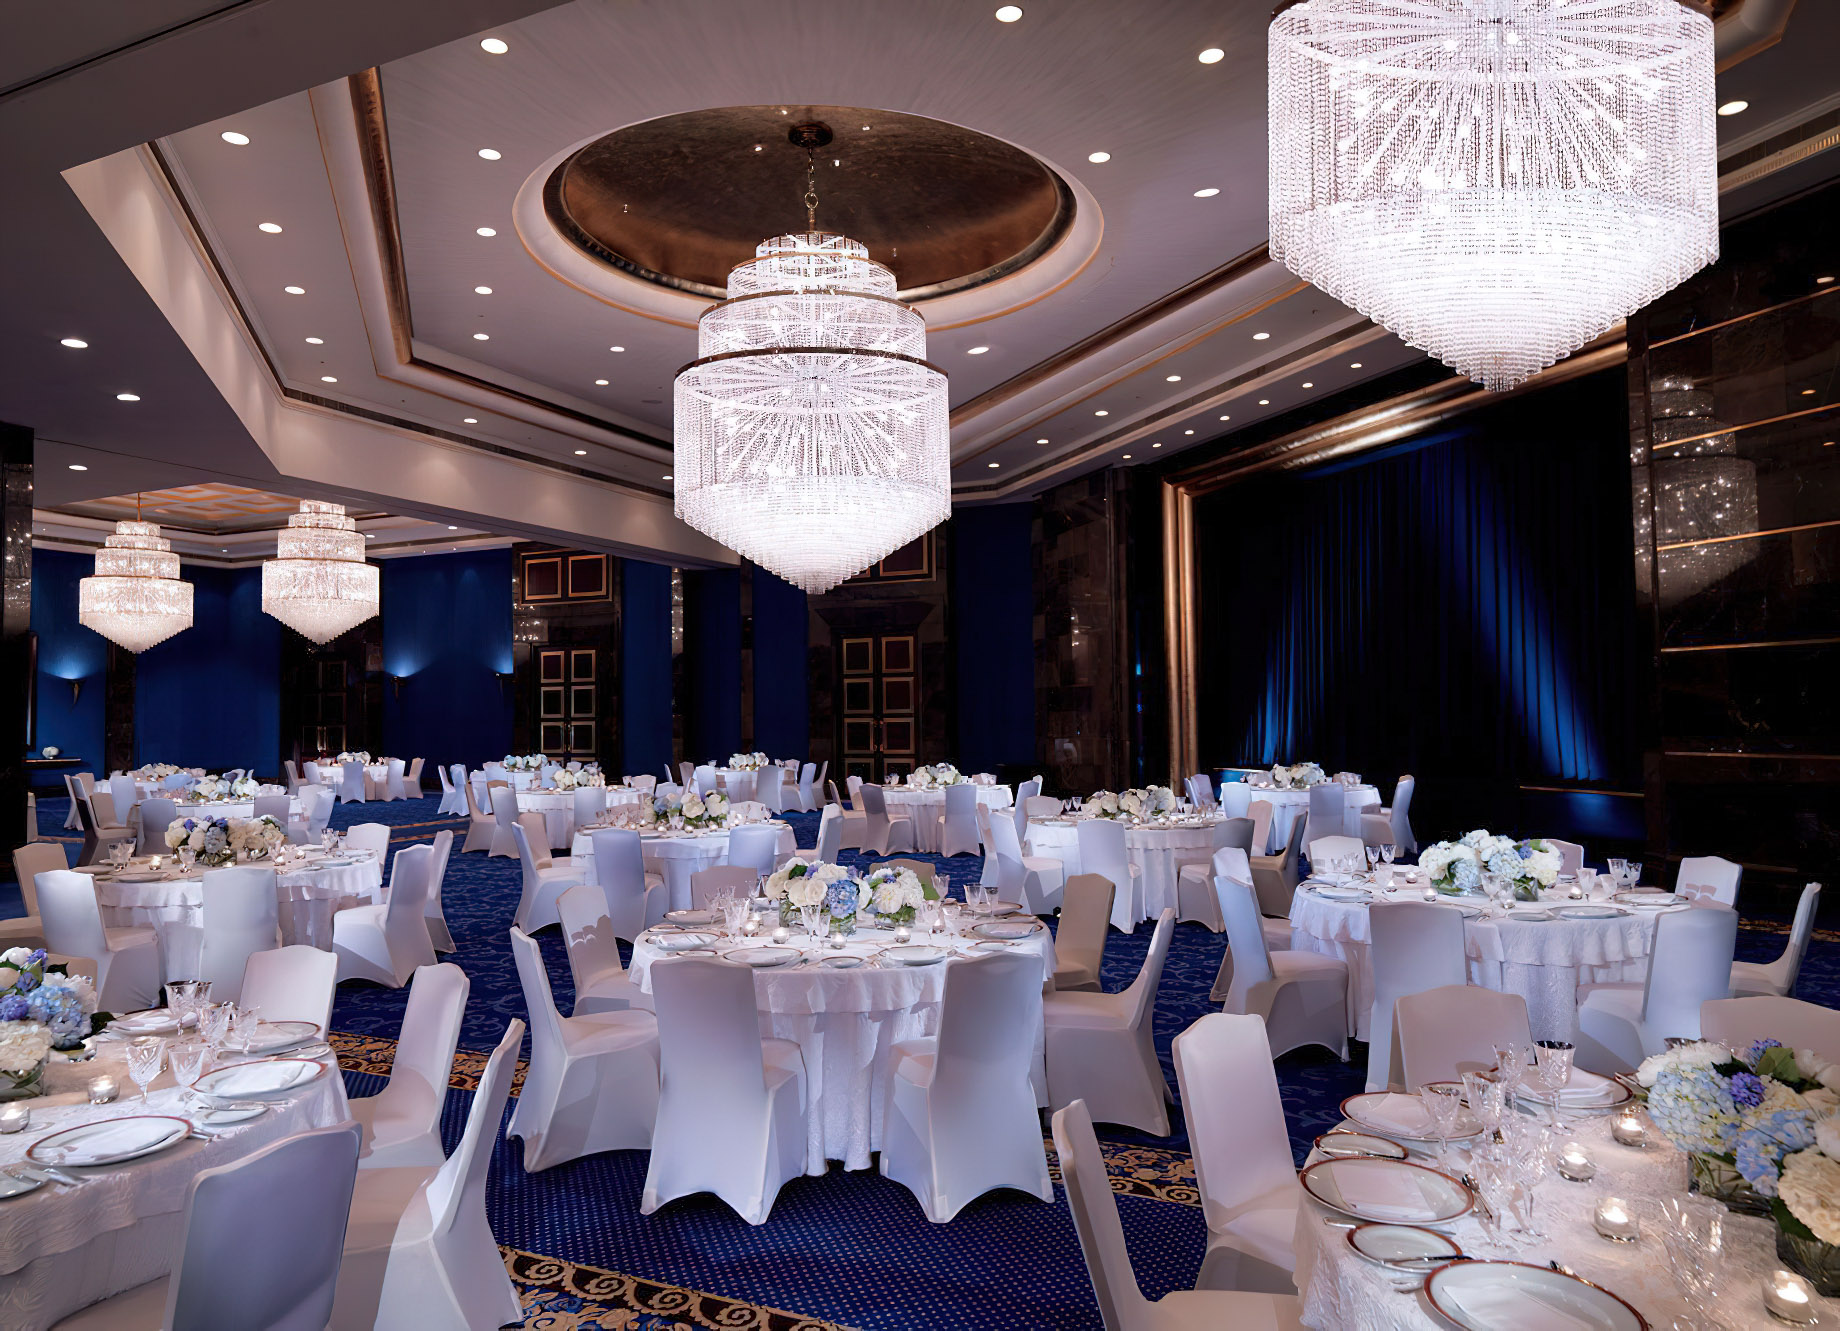 The Ritz-Carlton, Bahrain Resort Hotel – Manama, Bahrain – Conference Room Dining Setup